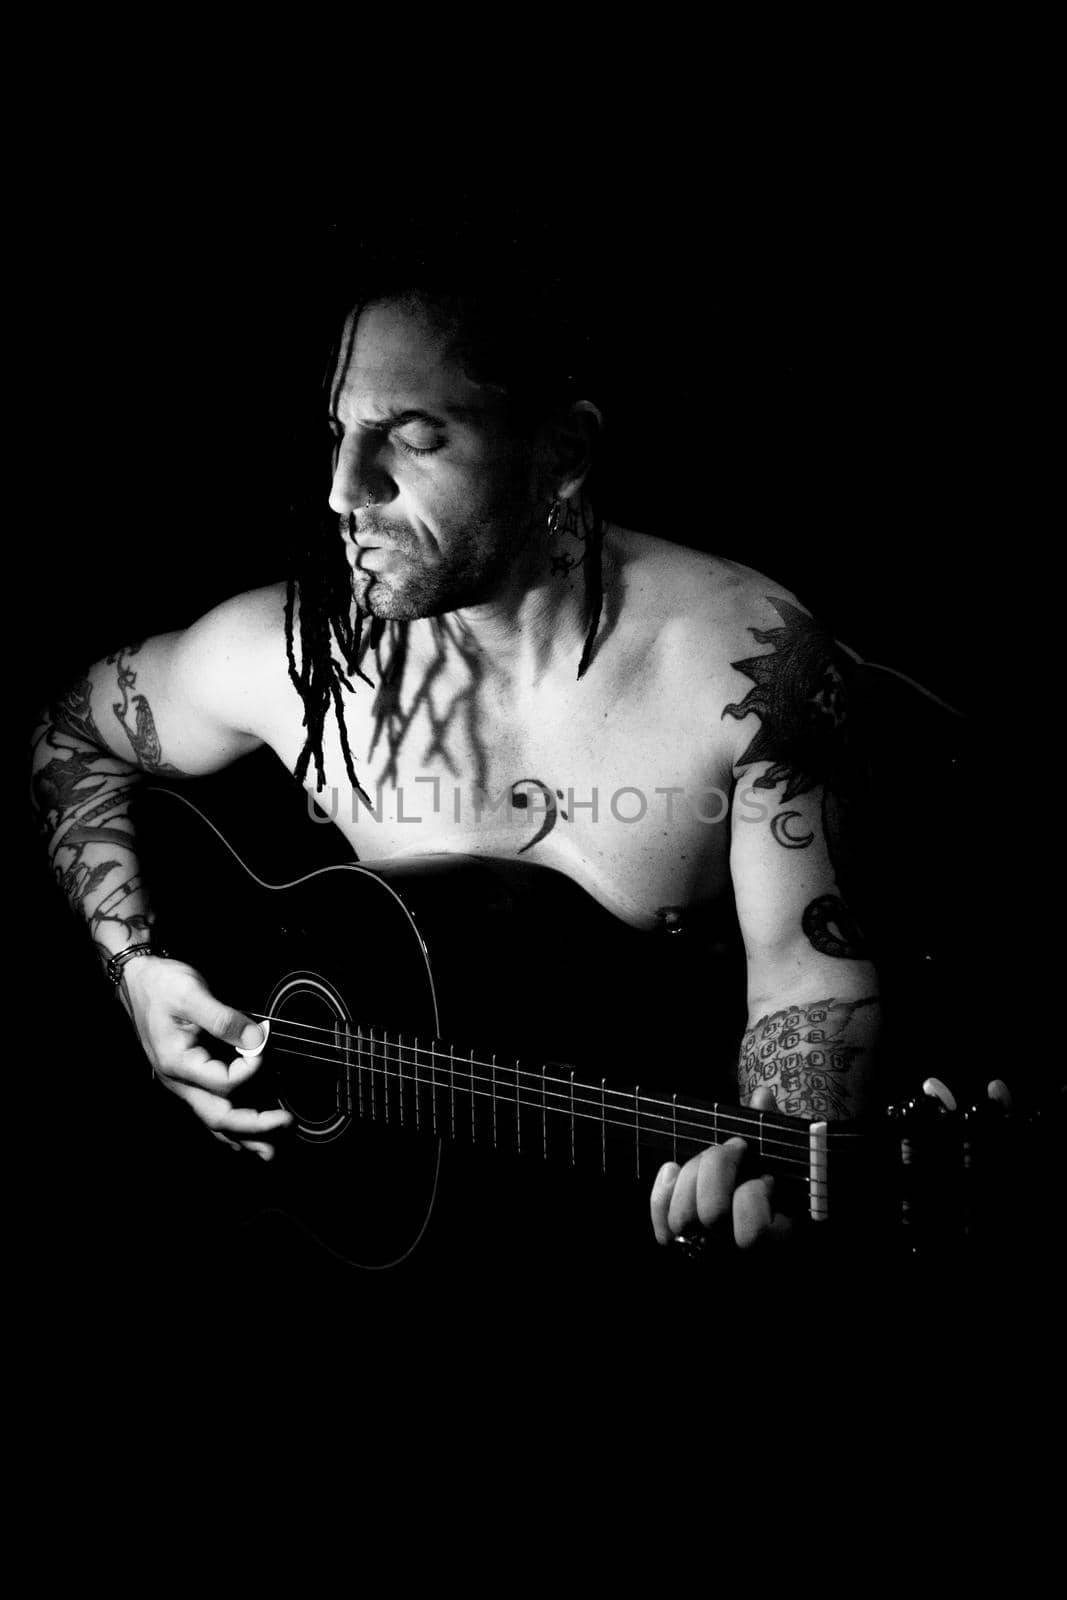 Man playing guitar and singing shirtless by GemaIbarra